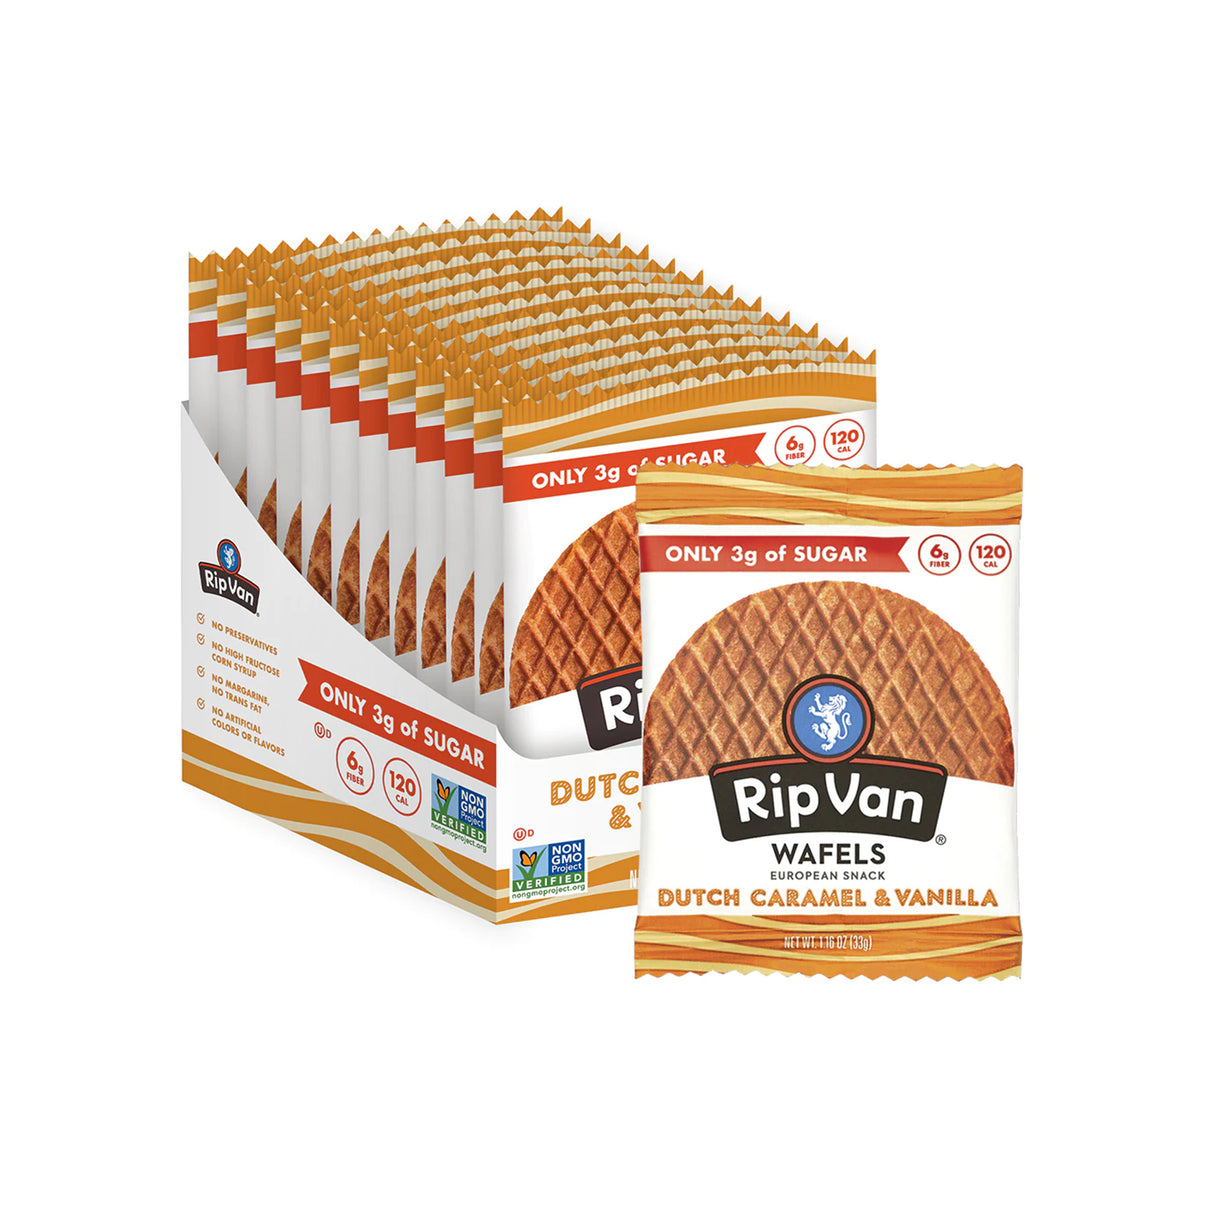 RipVan Dutch Caramel & Vanilla Wafels (12 x 33g)